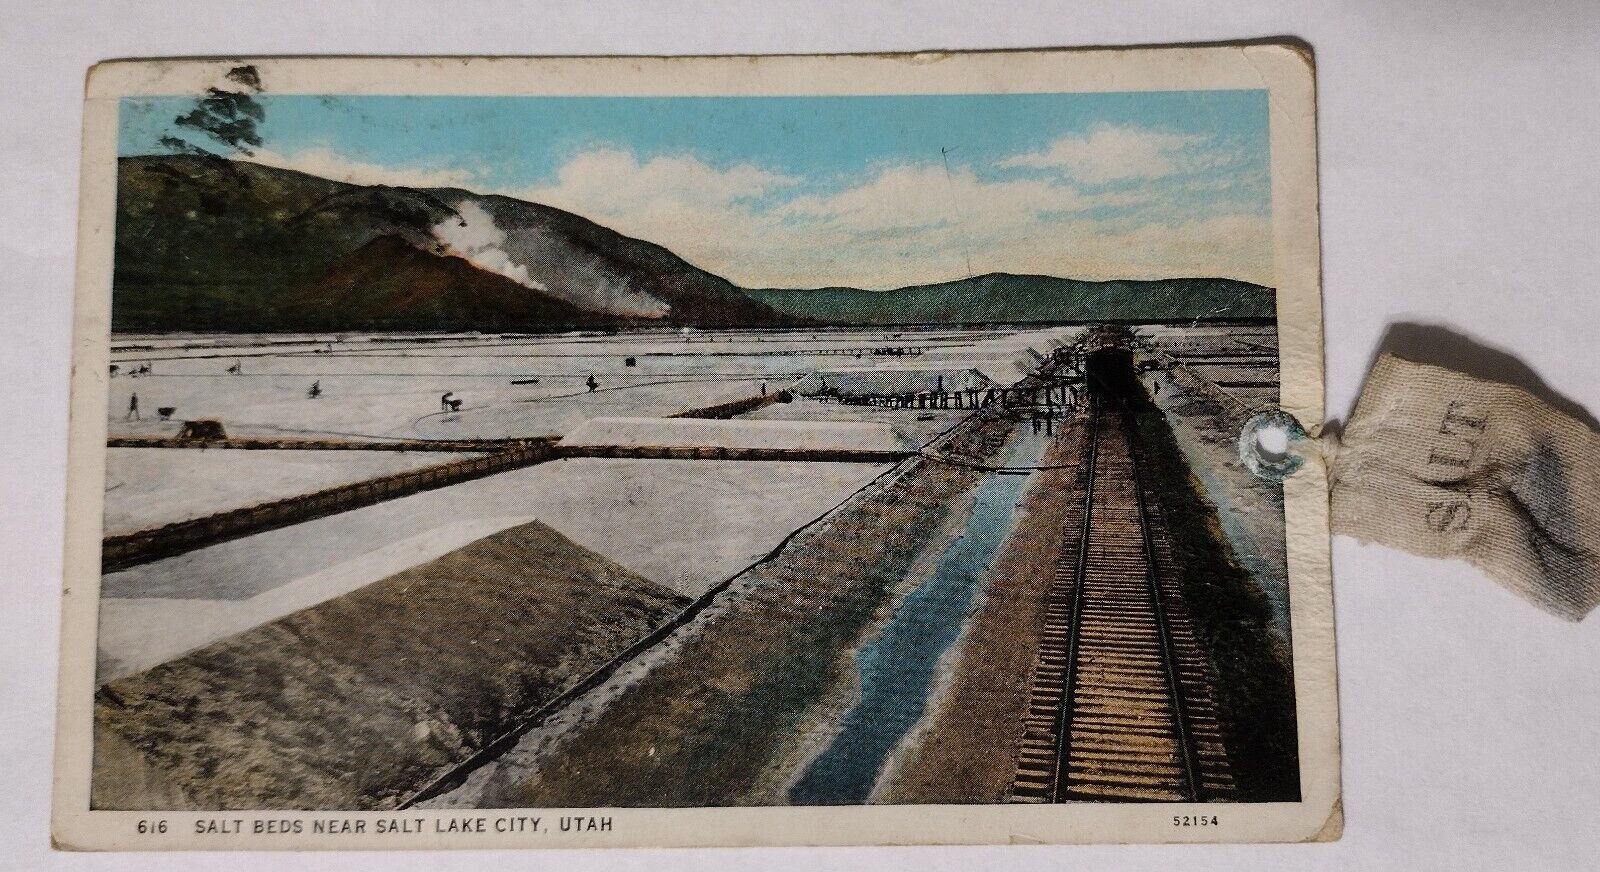 Gathering Salt from Salt Bed near Salt Lake City UT c1930 Souvenir Salt Bag